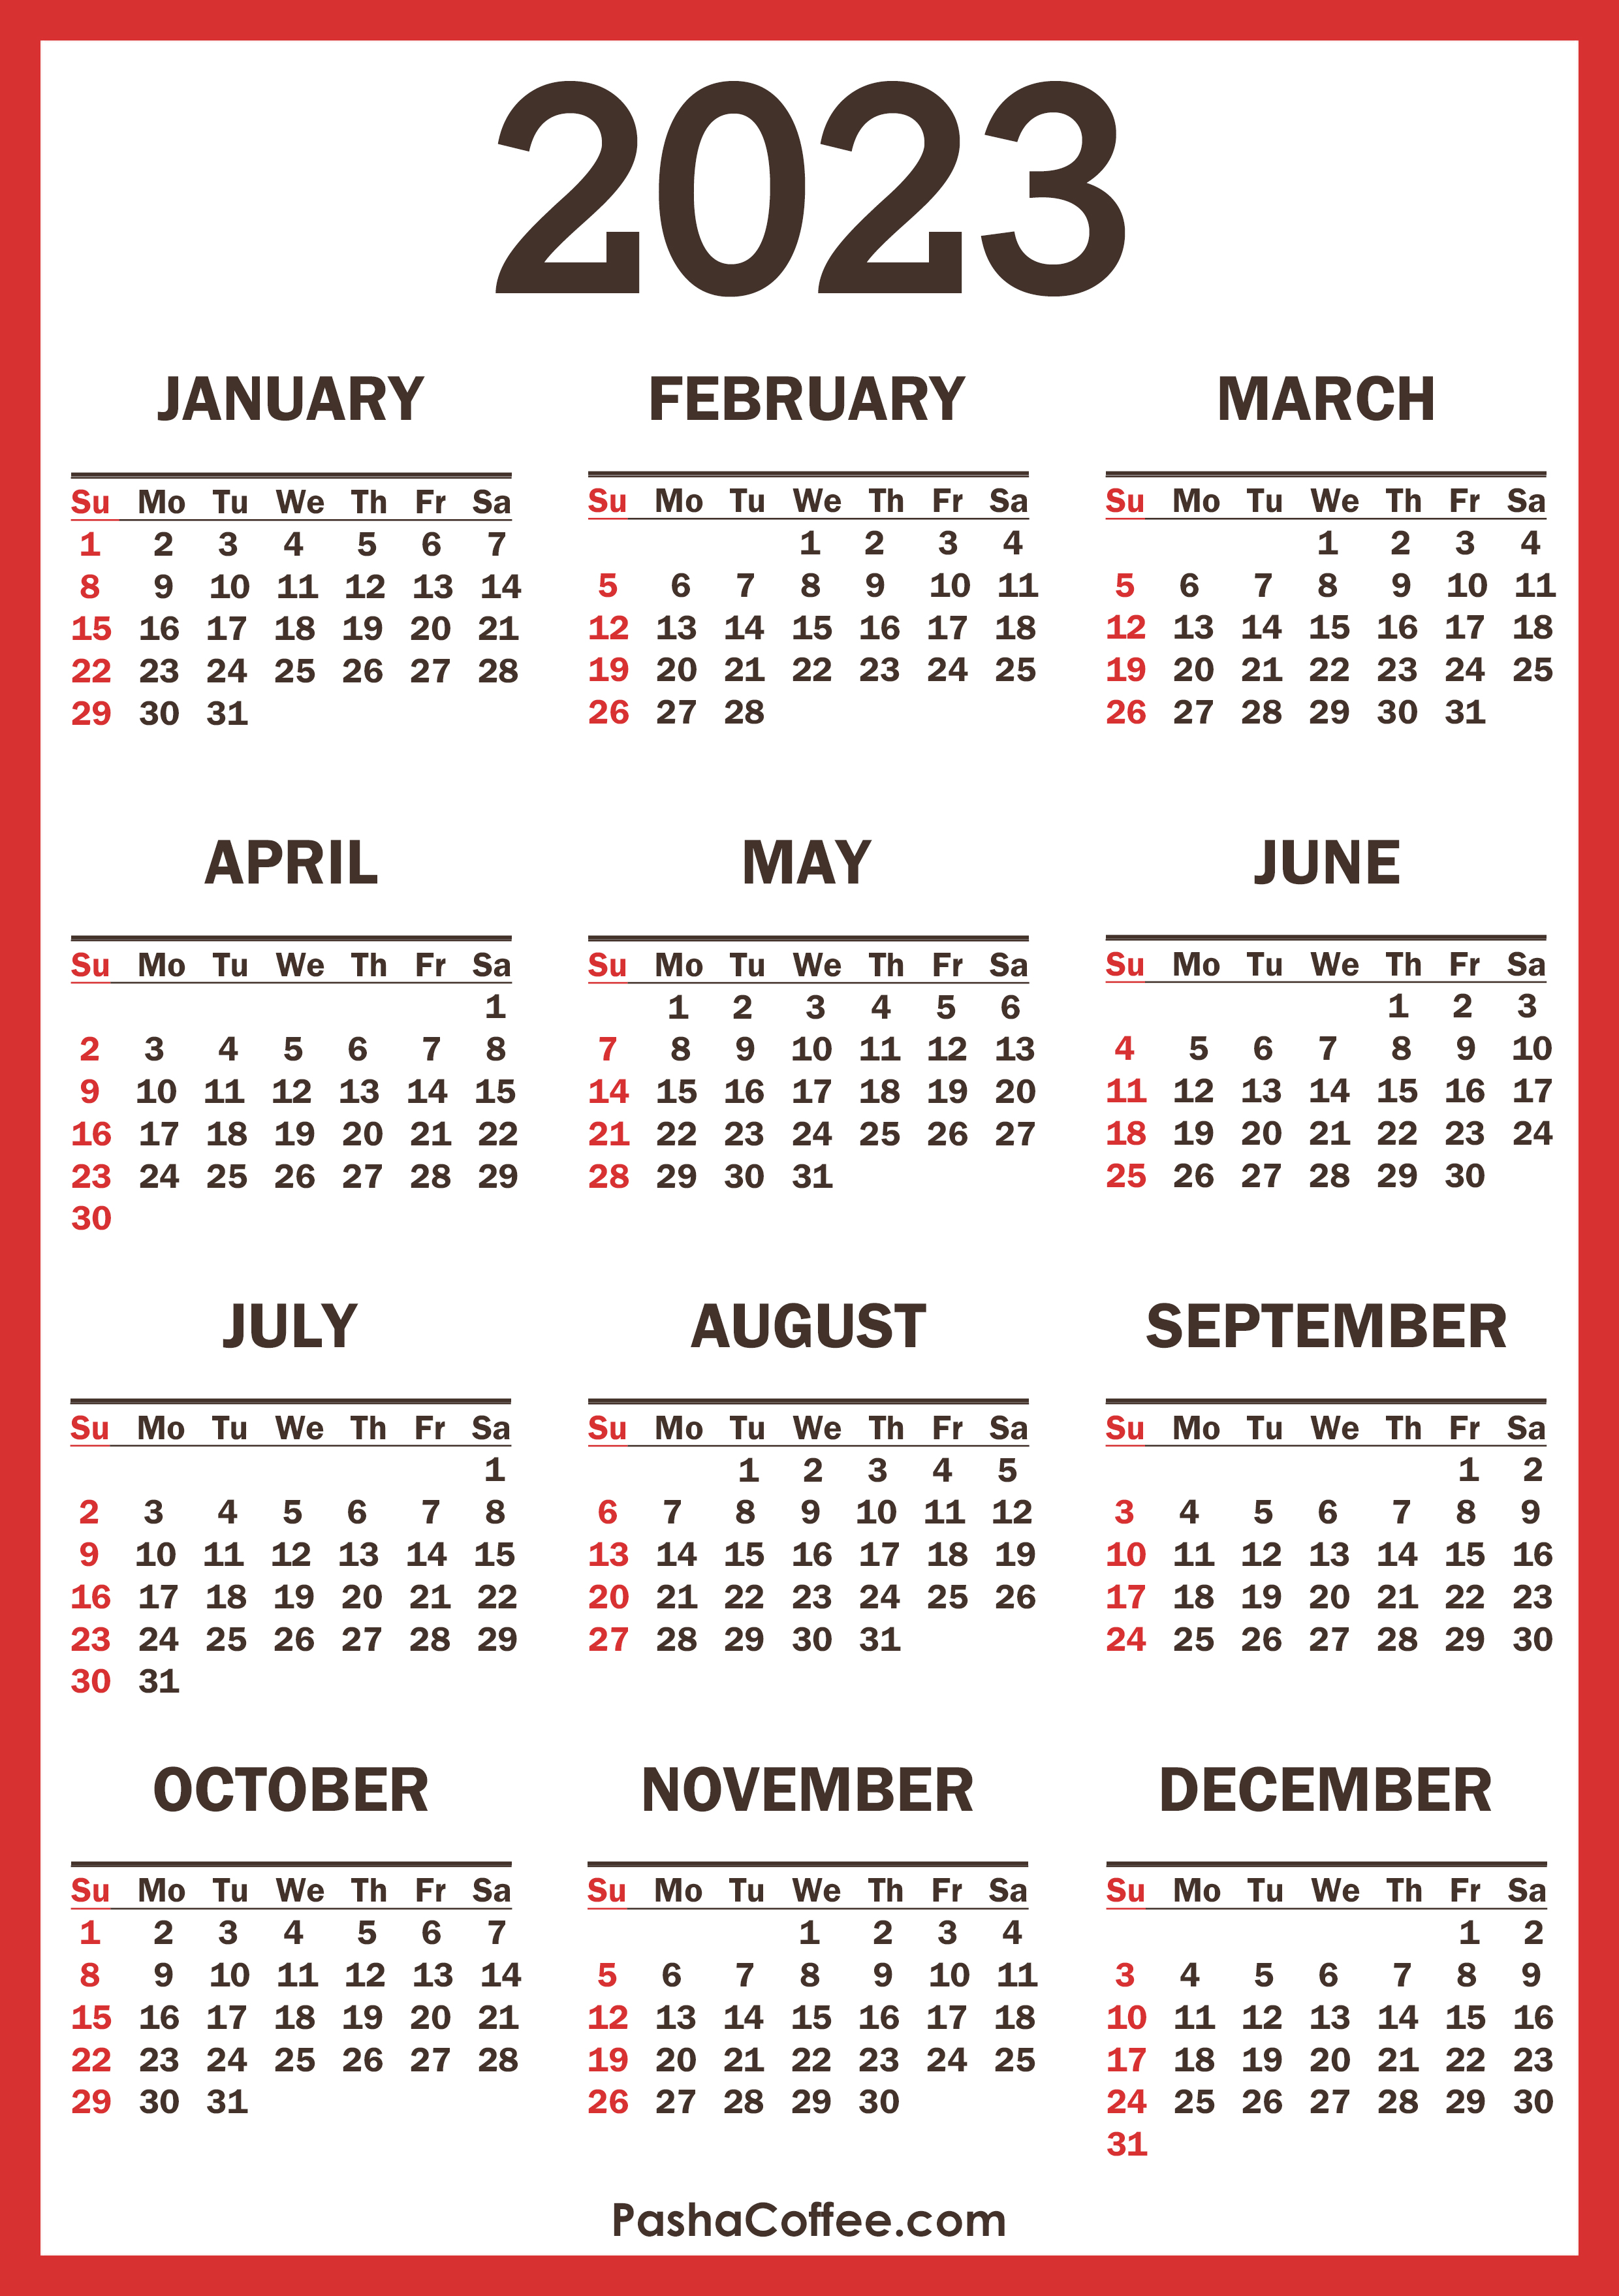 2023 Calendars - Download Printable Planner PDF